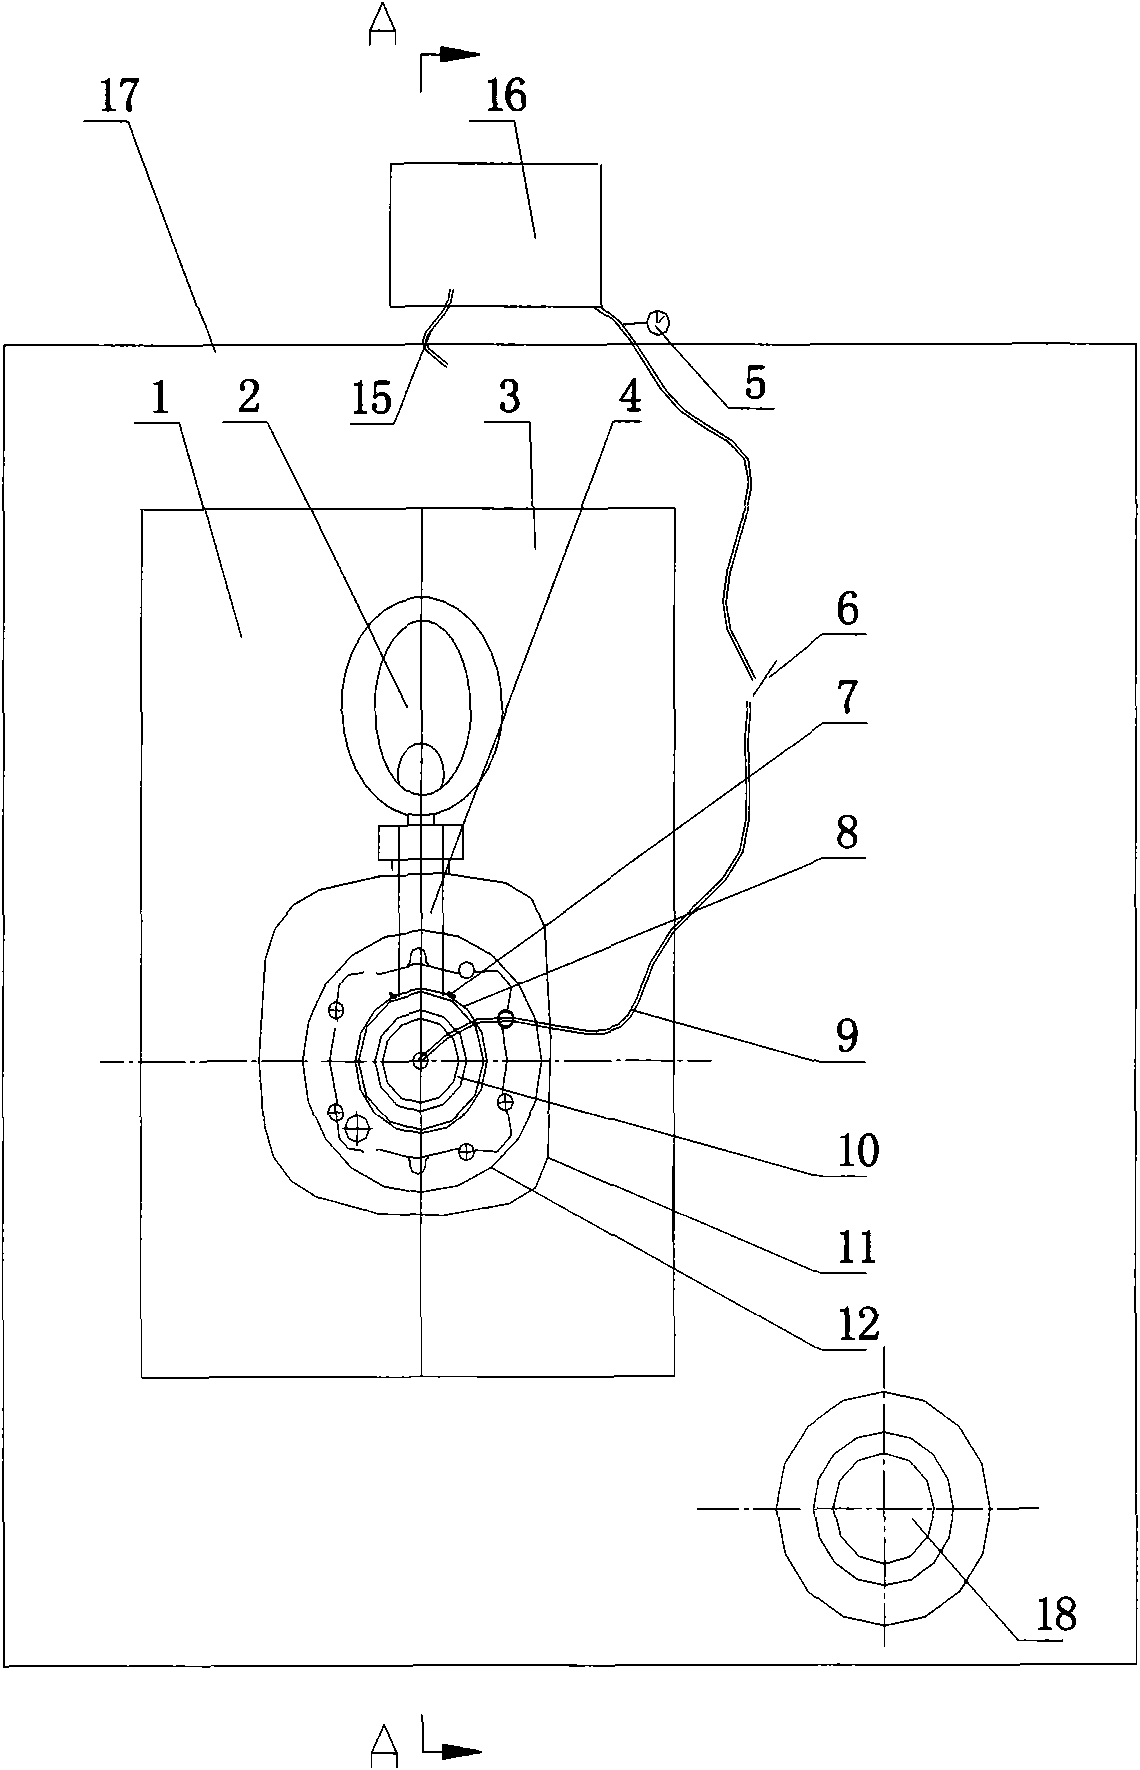 Vacuum gravity casting method of aircraft engine block